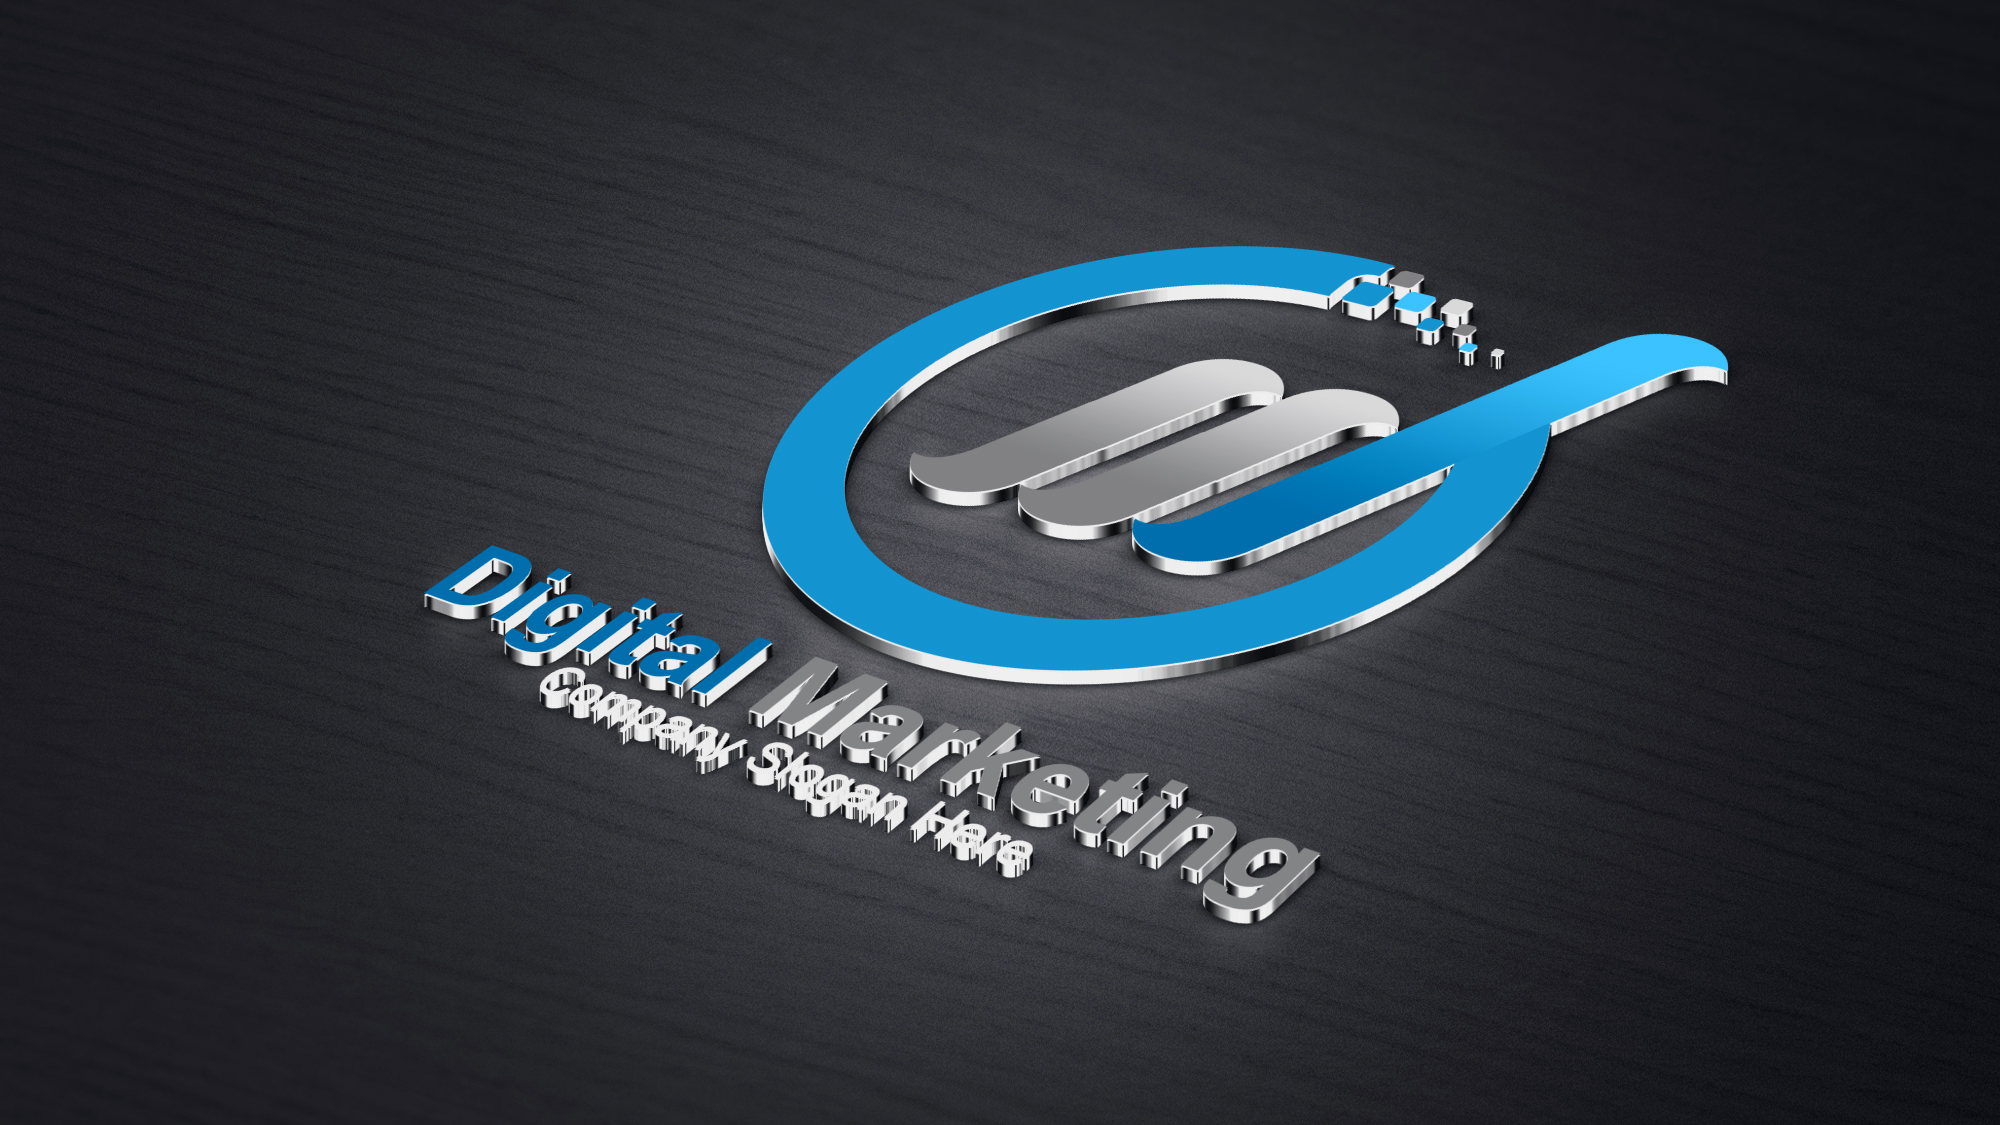 Digital Marketing Logo Template